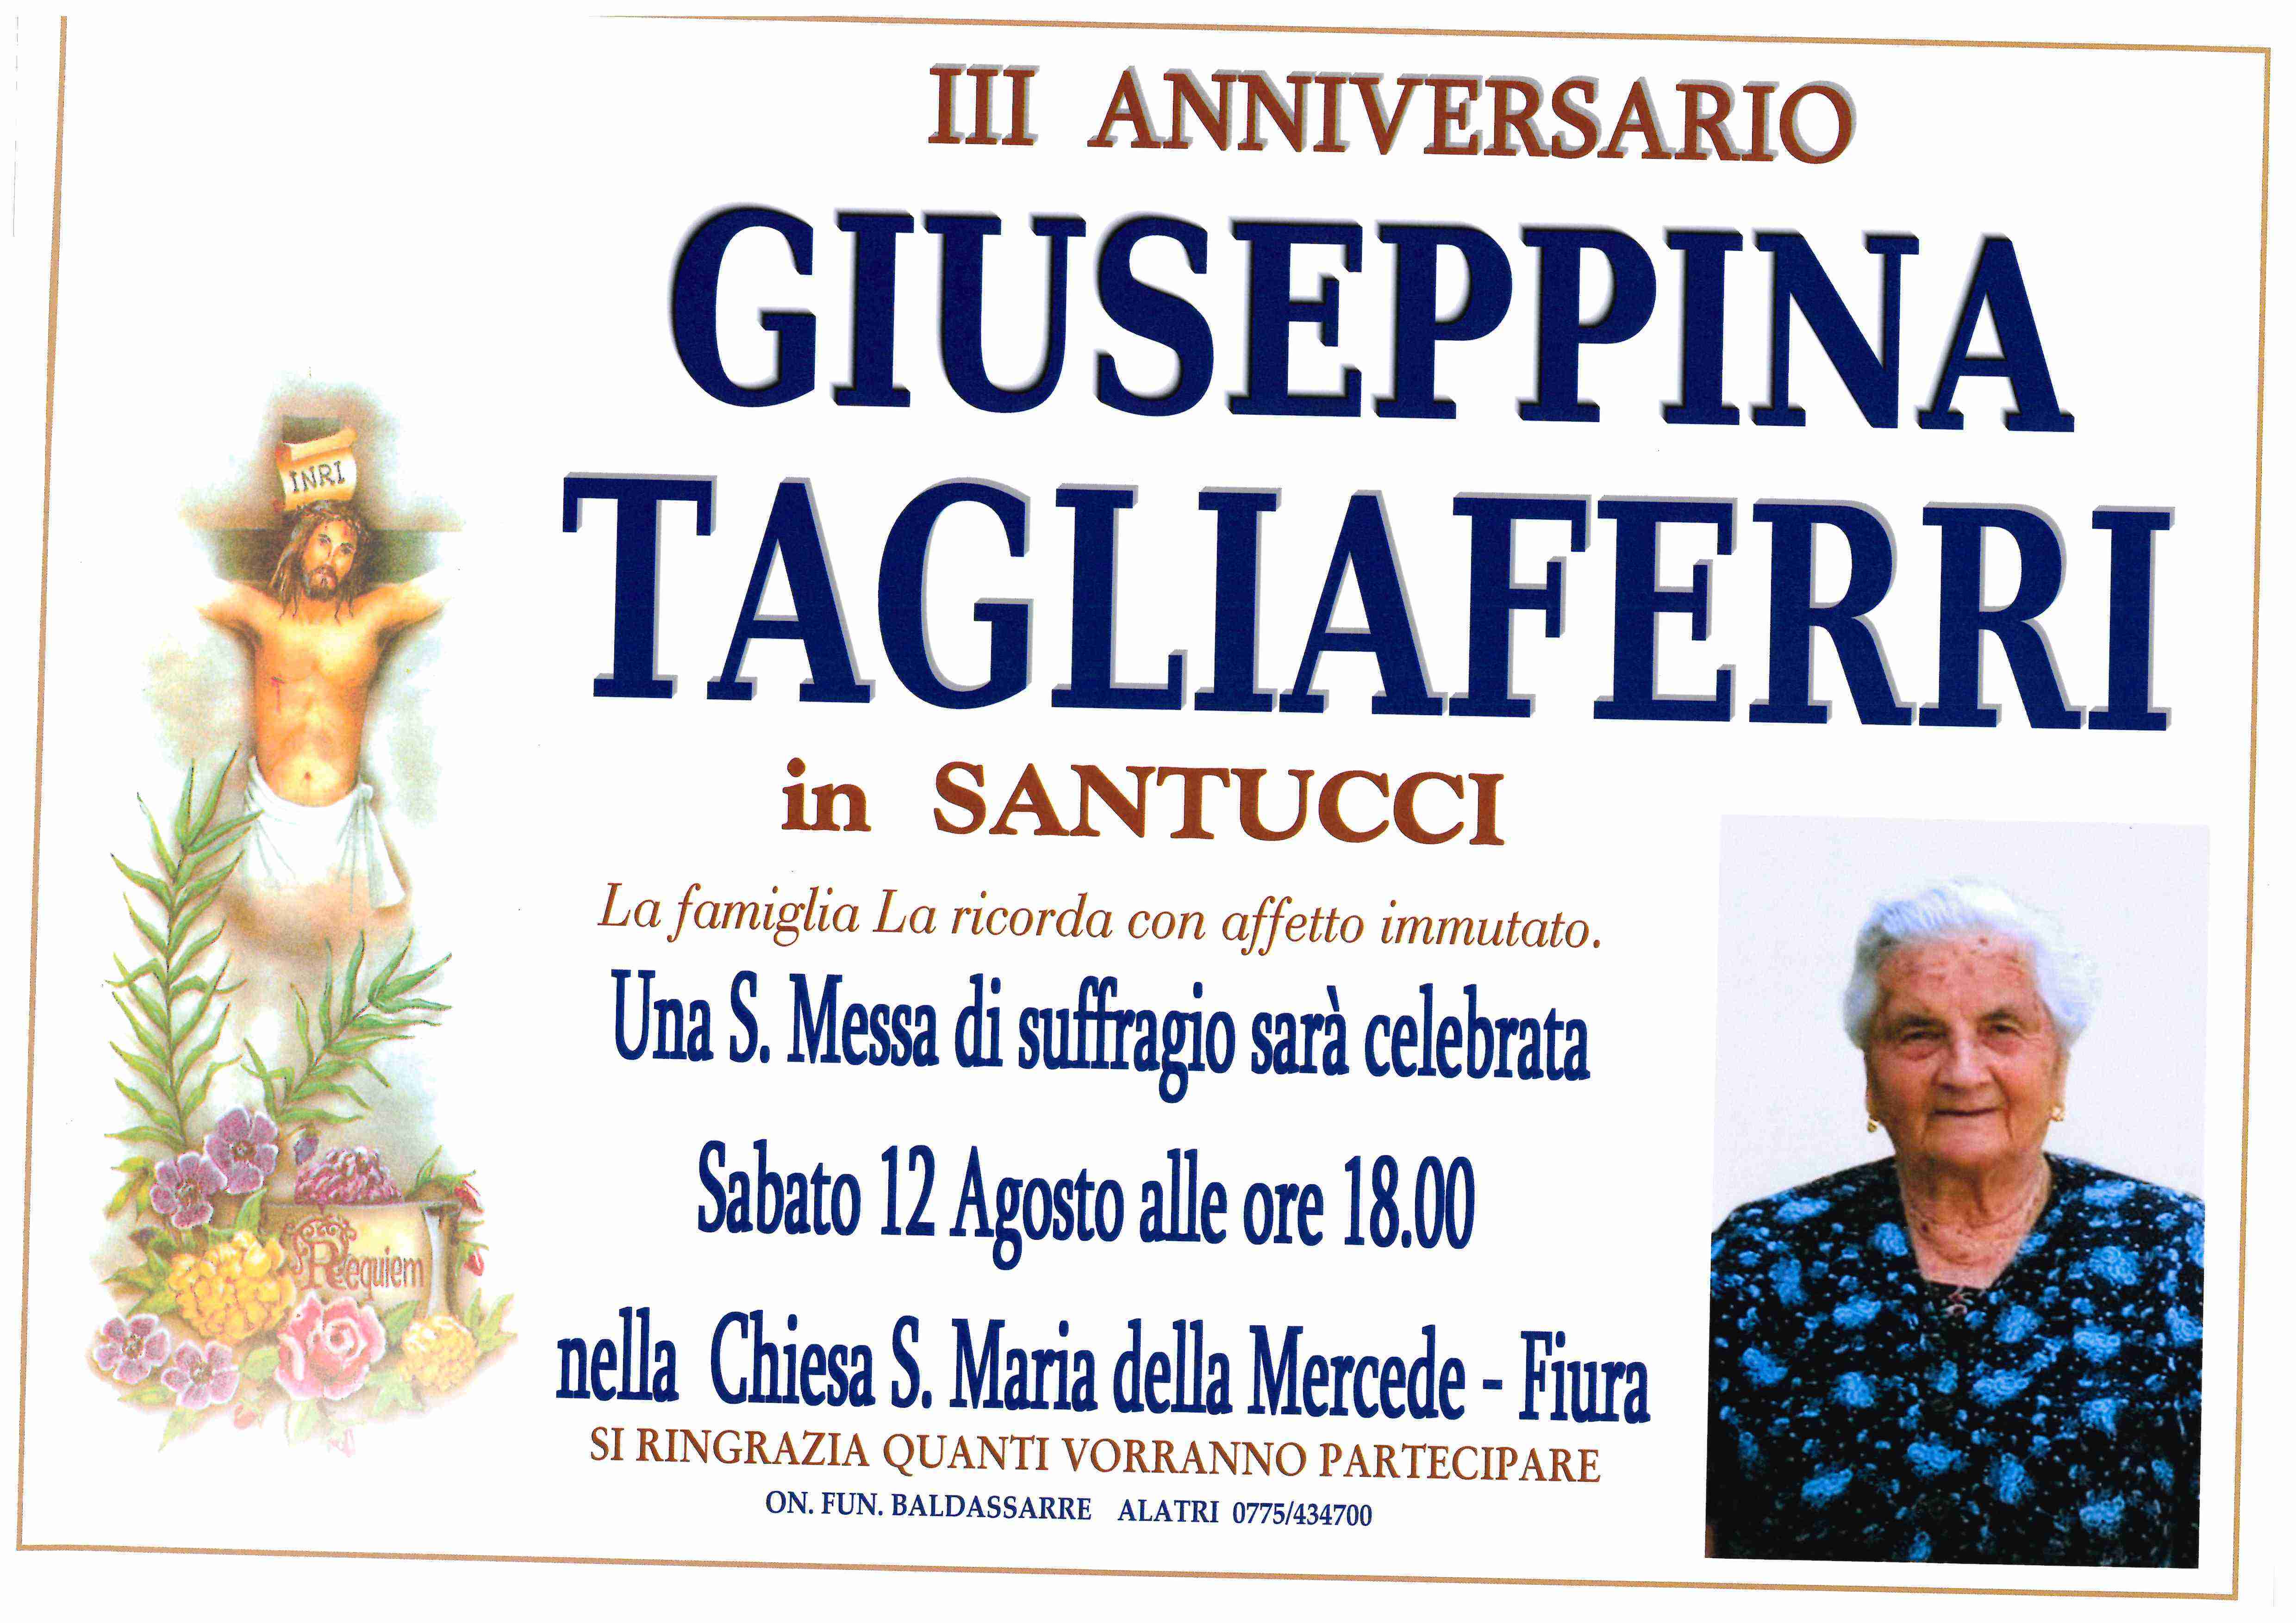 Giuseppina Tagliaferri